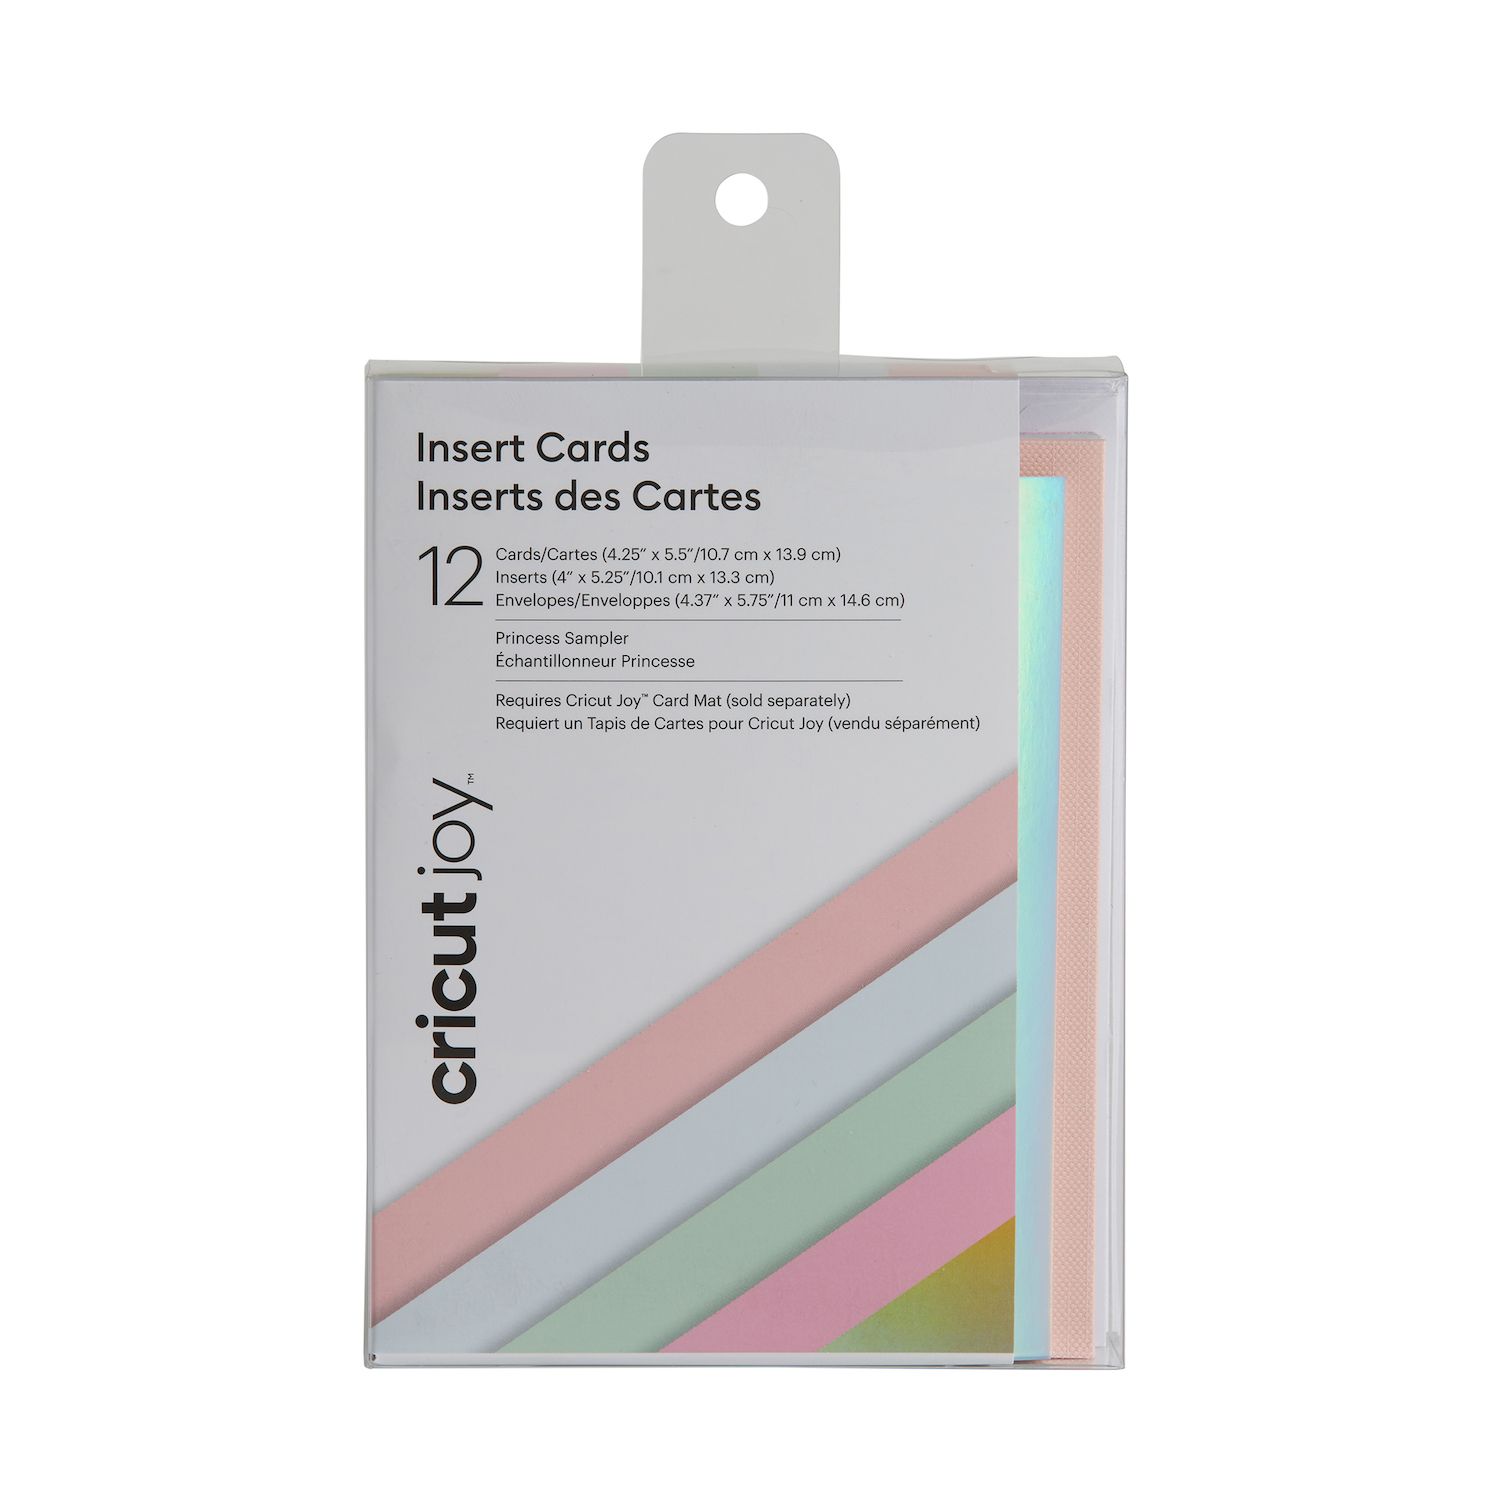 6 Pack: Cricut Joy Card Mat, 4.5 inch x 6.25 inch, Size: 4.5 x 6.25, Other